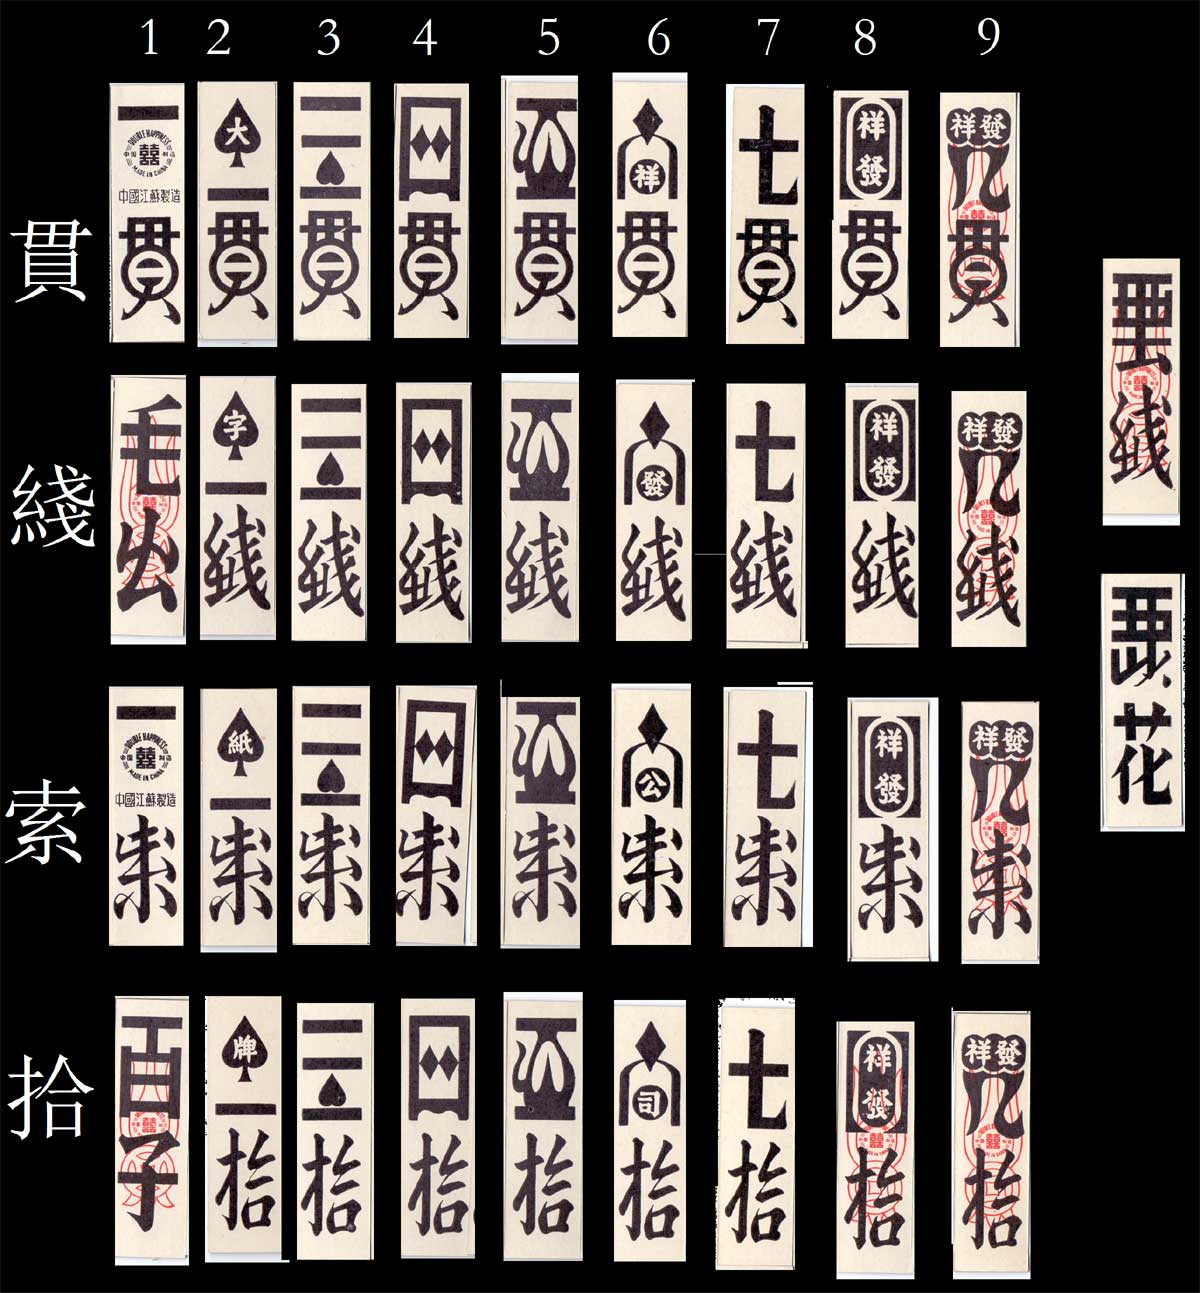 Hakka cards arranged according to rank and suit. https://www.wopc.co.uk/china/hakka